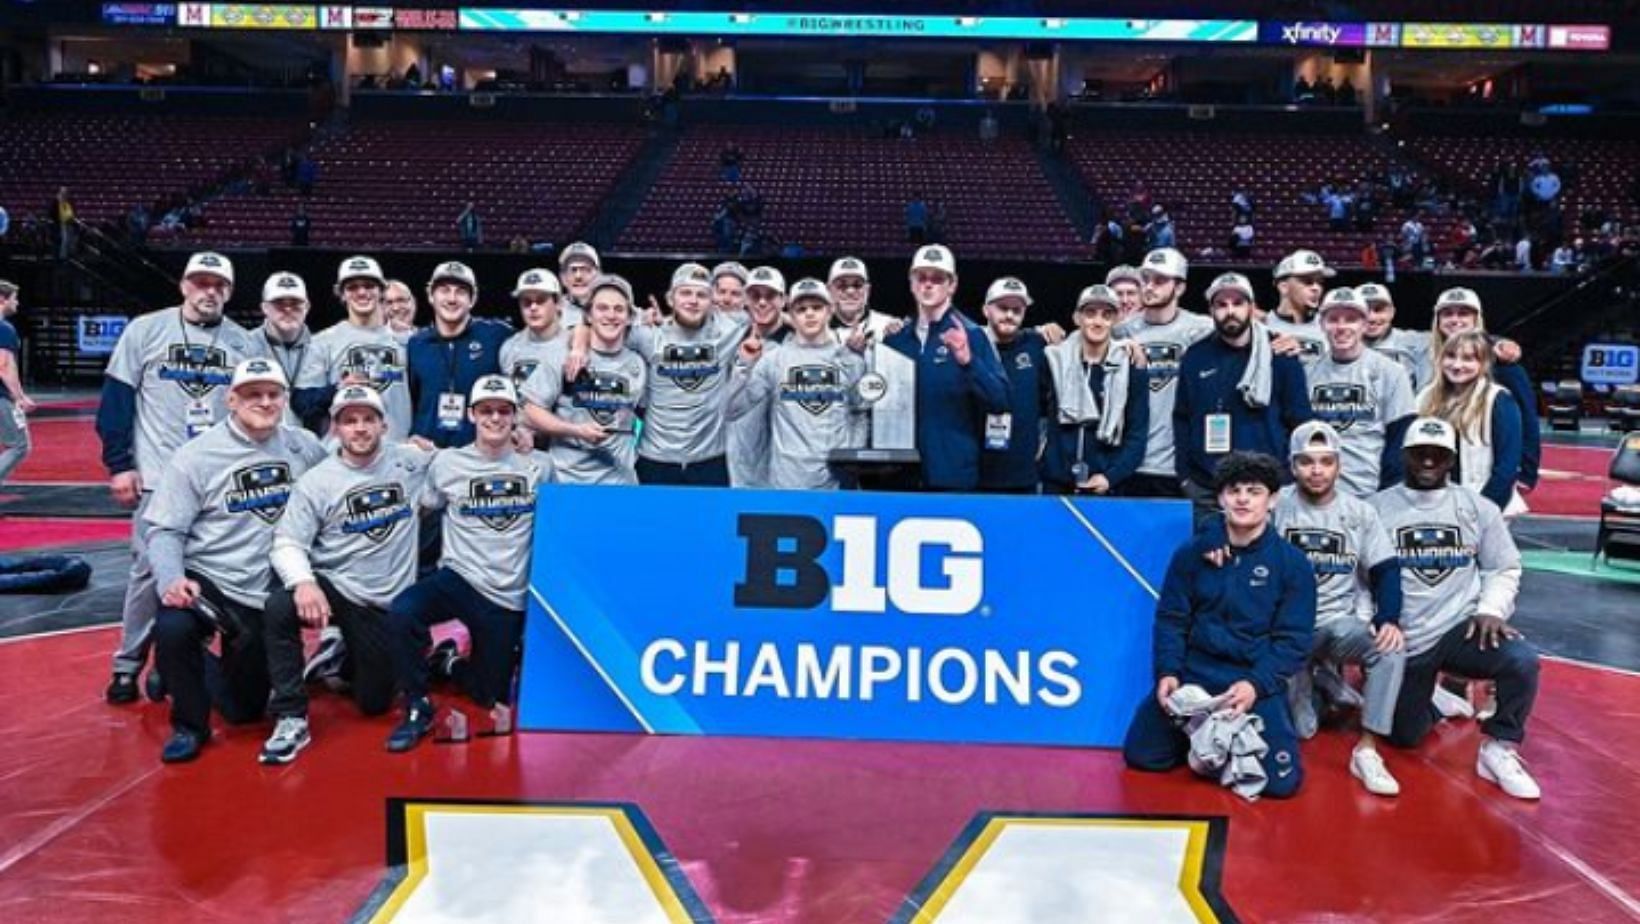 Penn State won the Big Ten wrestling championships 